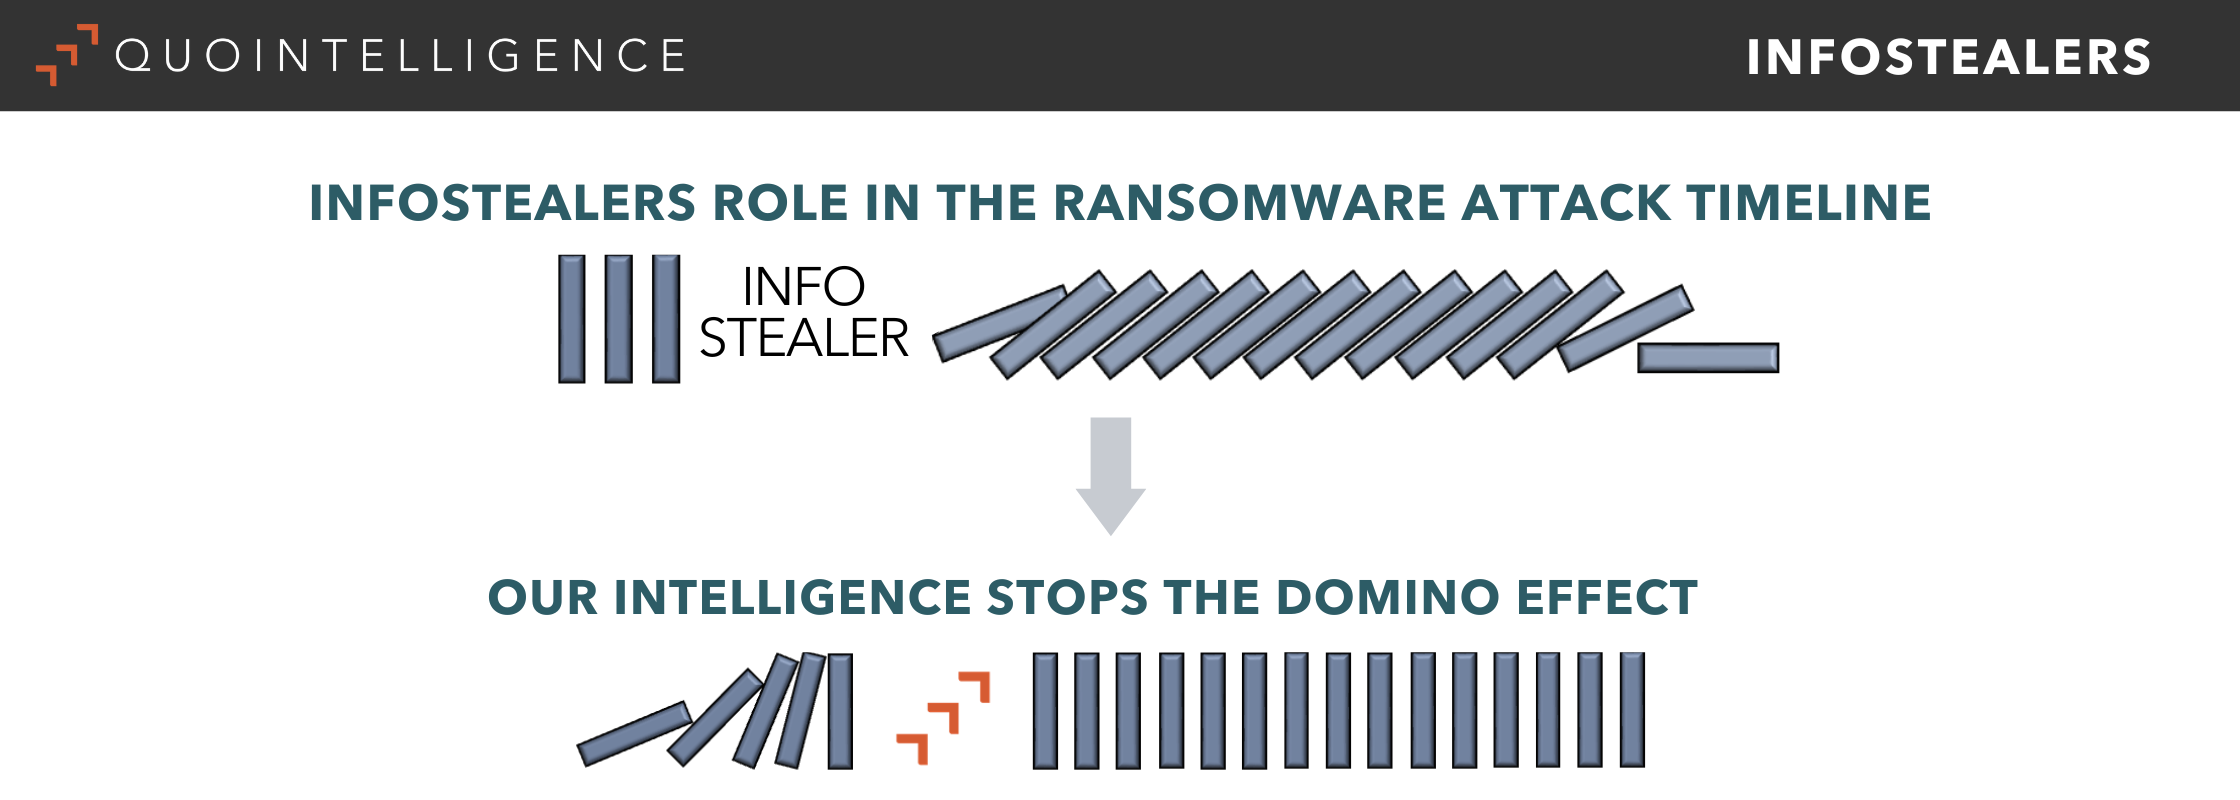 The Infostealer Malware Domino Effect